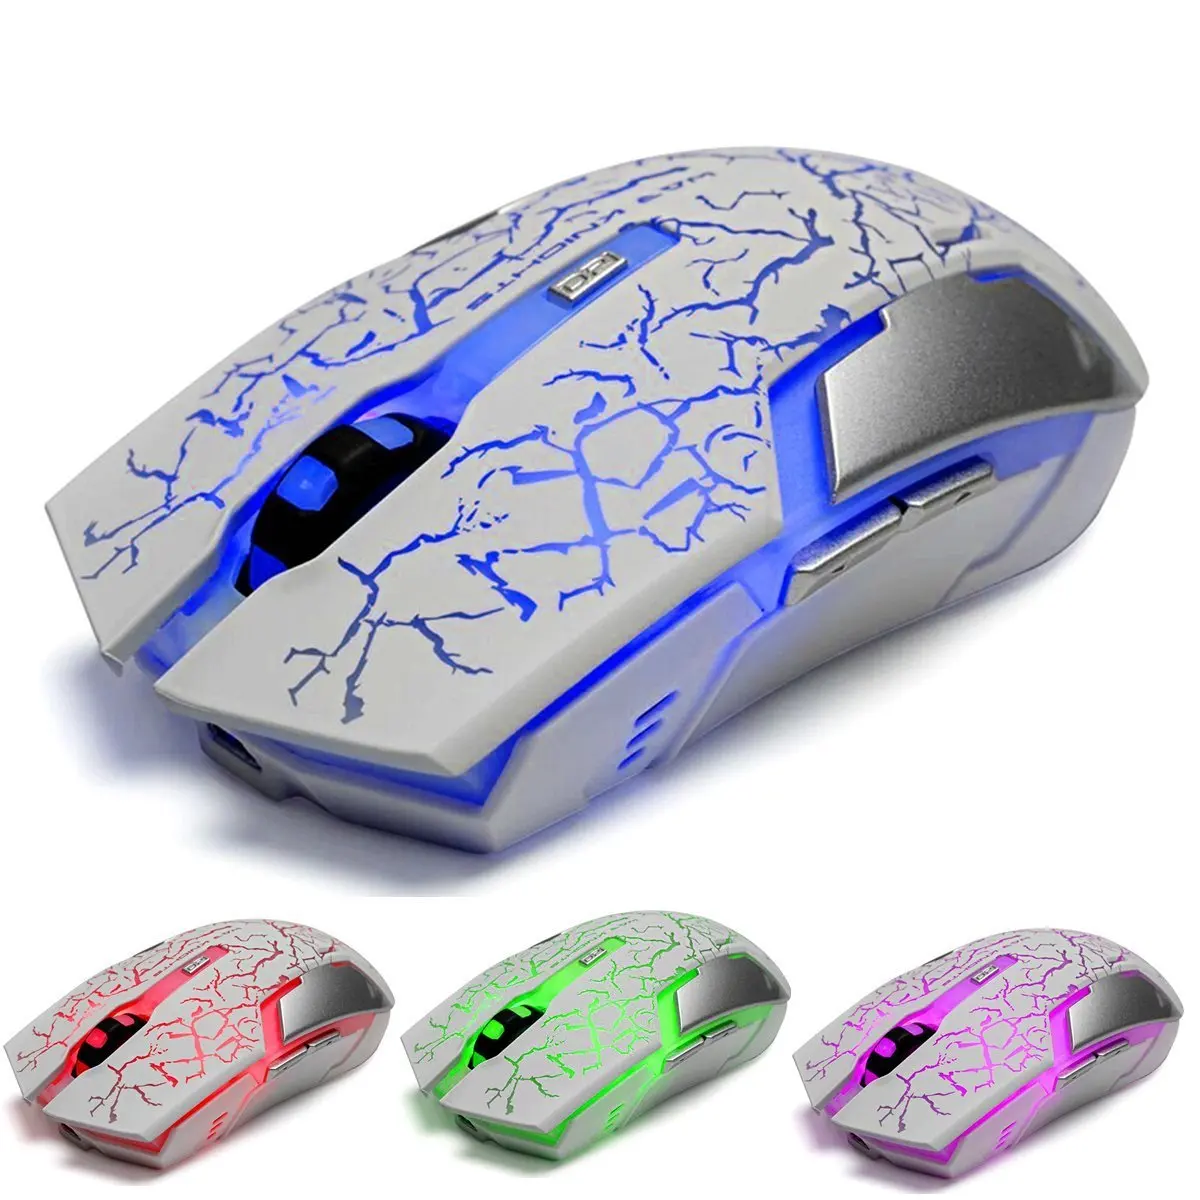 Vgn игровая мышь беспроводная dragonfly. Mouse Rechargeable Wireless. Игровая мышь беспроводная TECHSHOW c10298. Wireless Mouse FV-185. JITE Wireless Mouse t-18.